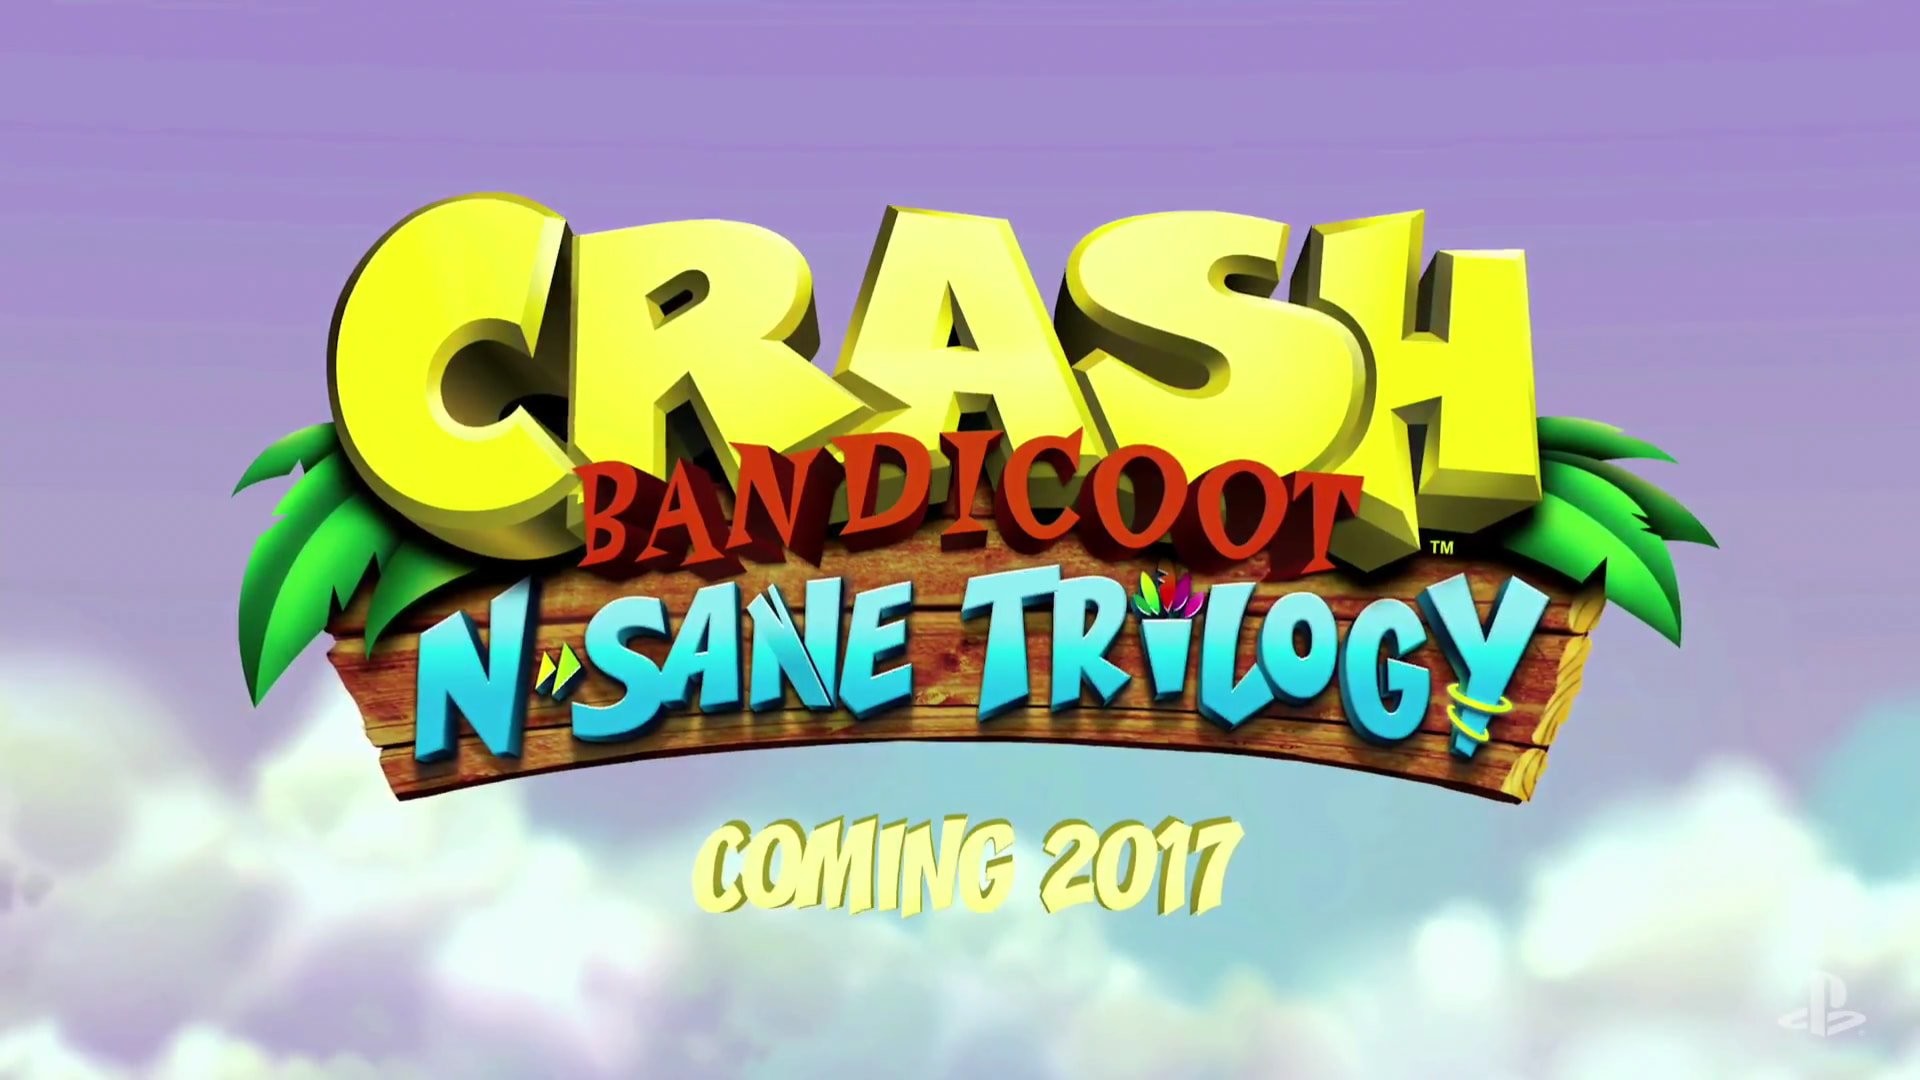 1920x1080 Crash Bandicoot N. Sane Trilogy Jumping into 2017!